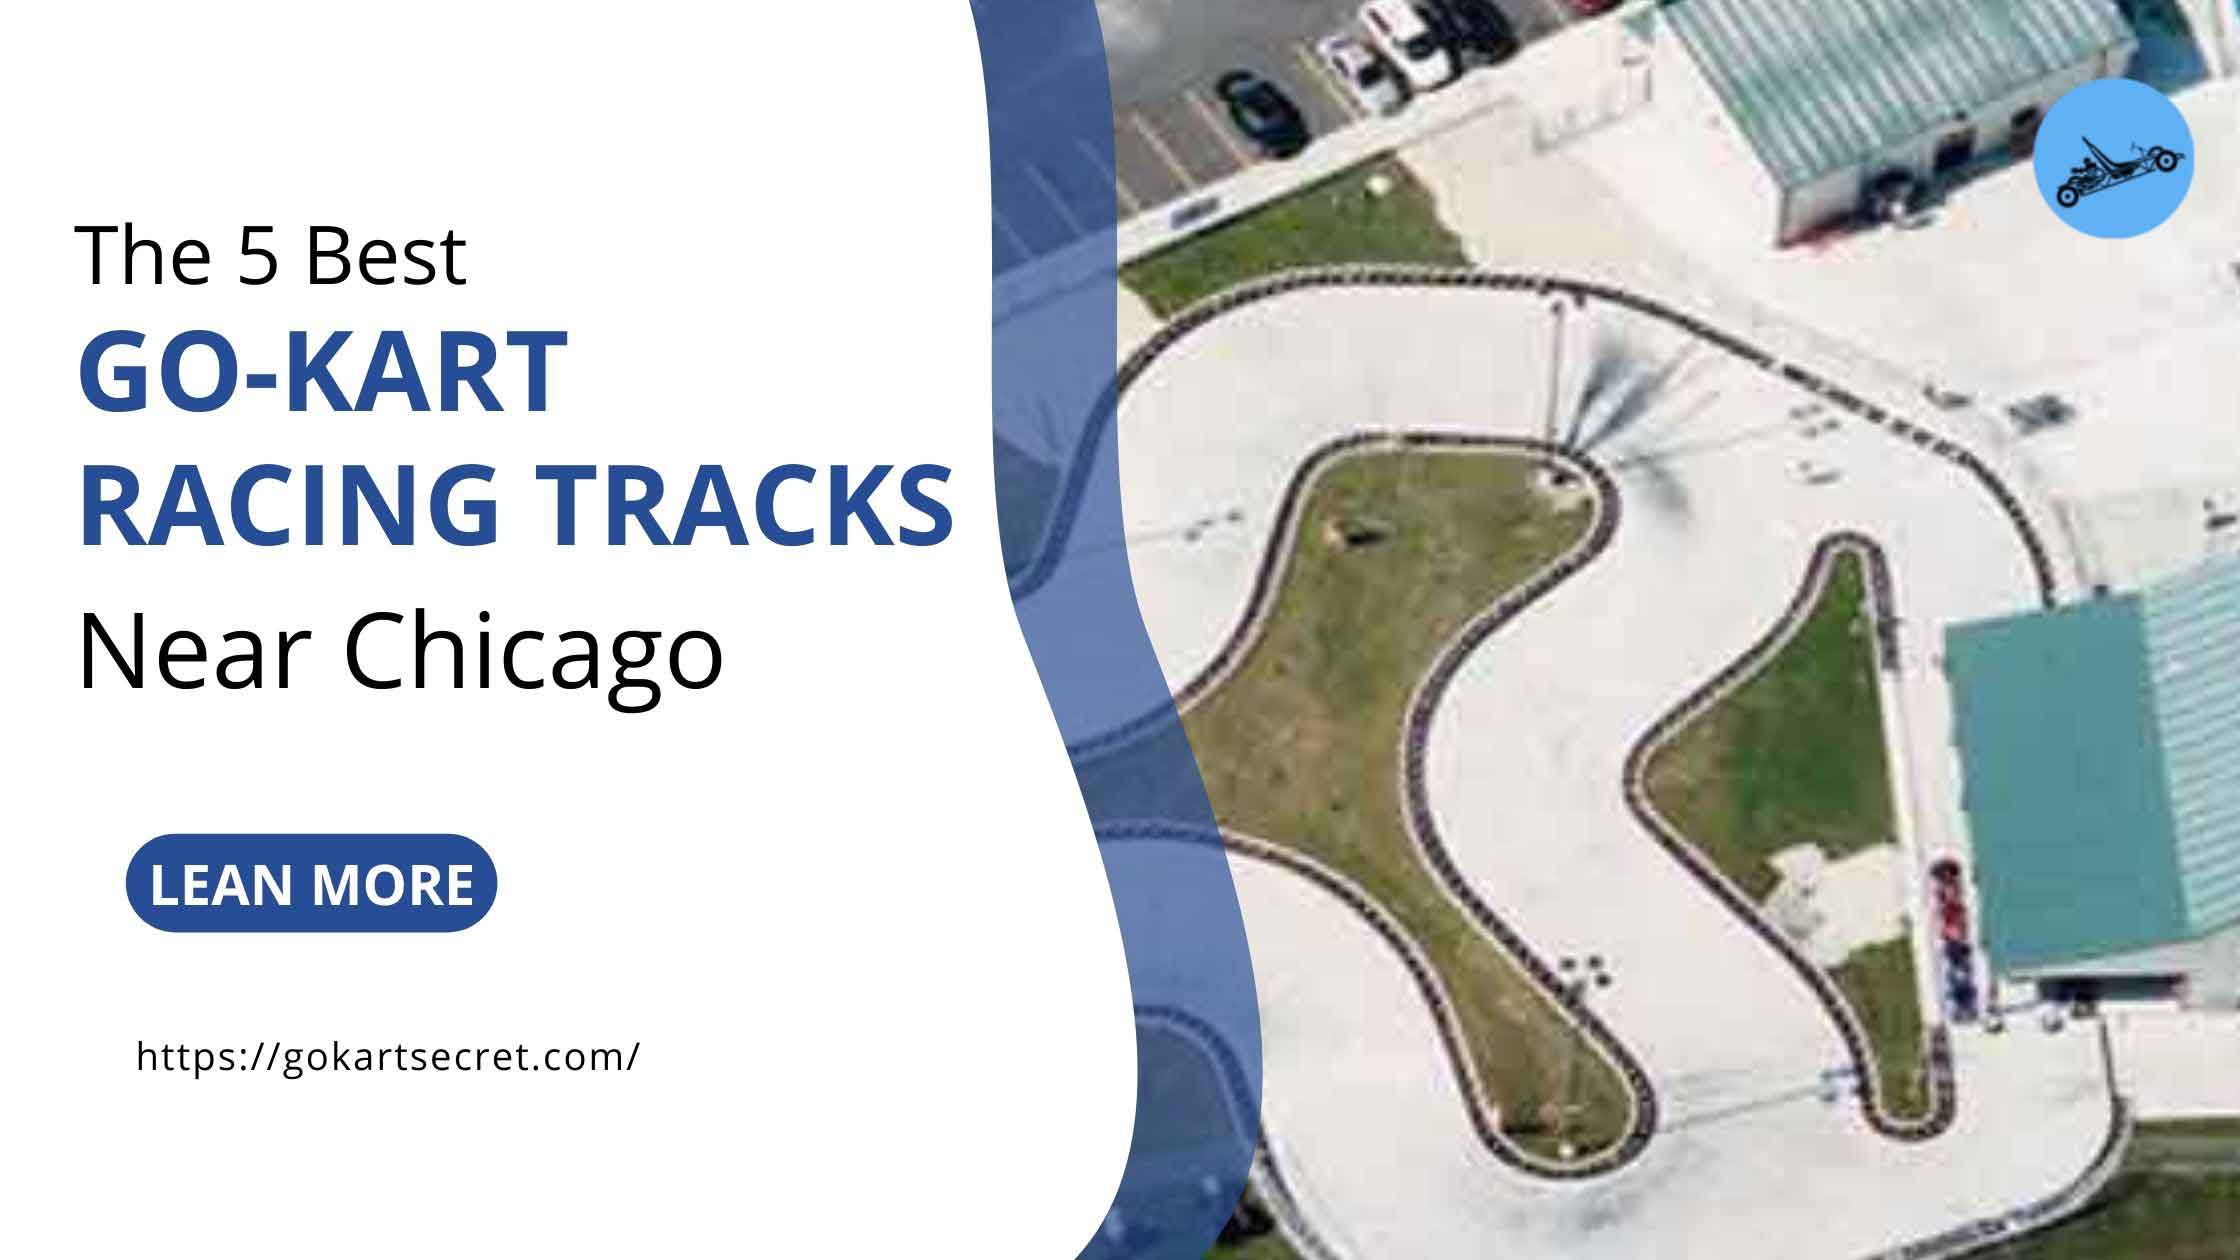 The 5 Best Go-Kart Racing Tracks Near Chicago!